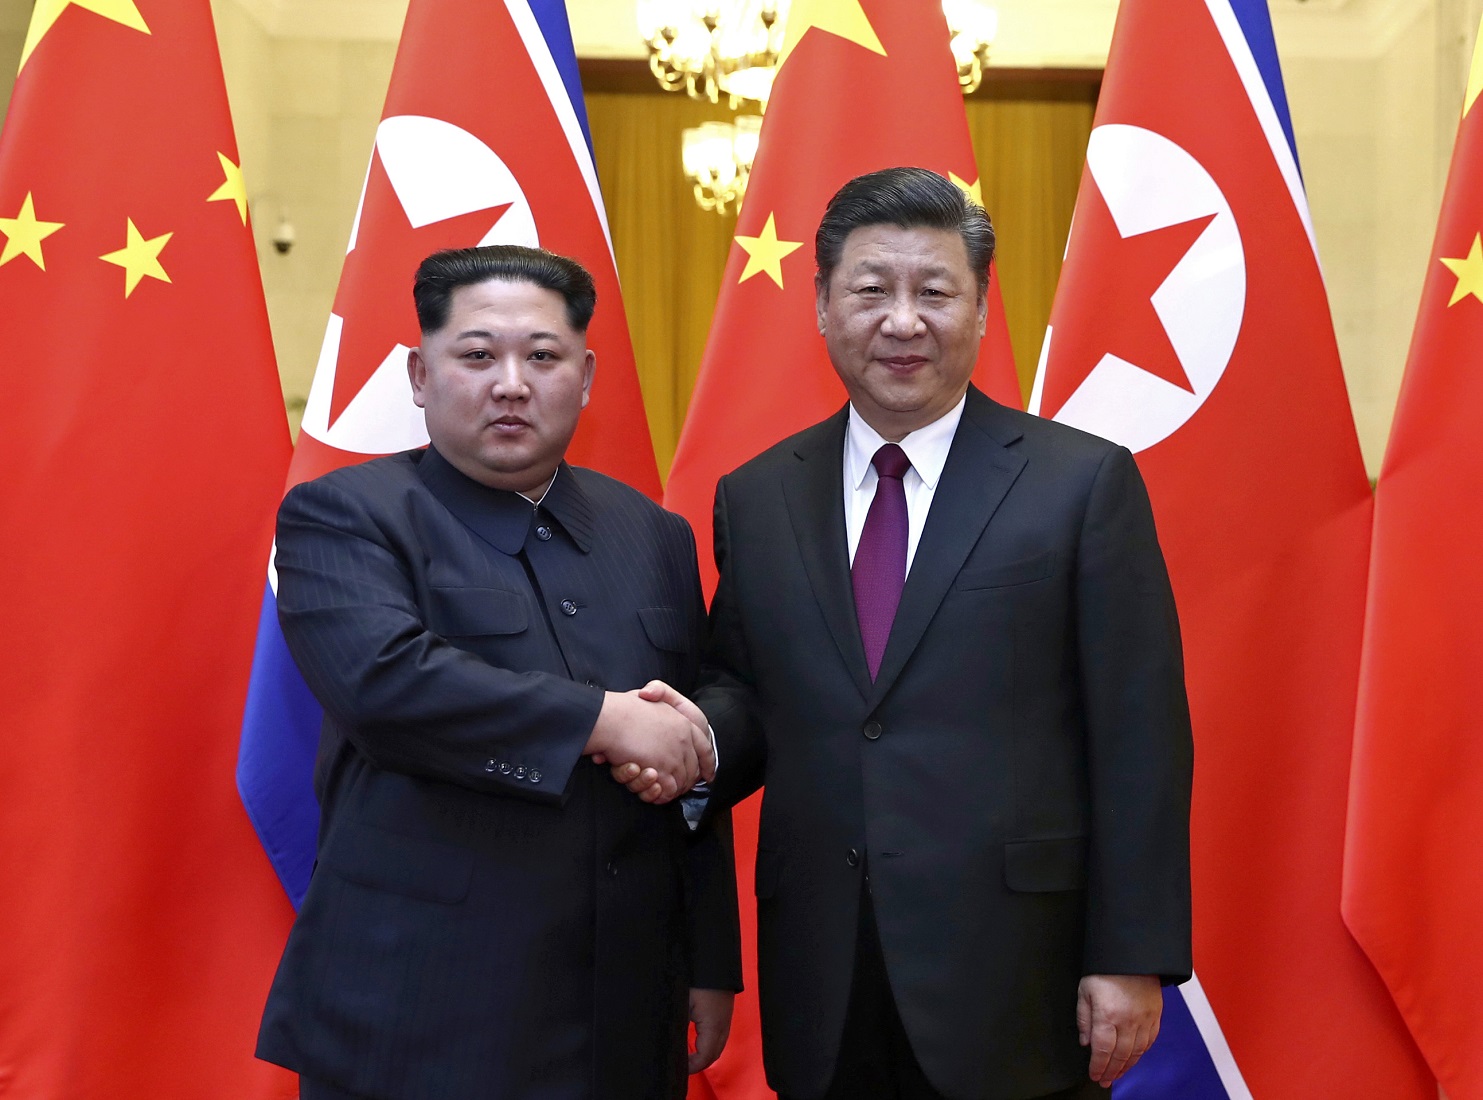 Xi Jingping right, and Kim Jong Un